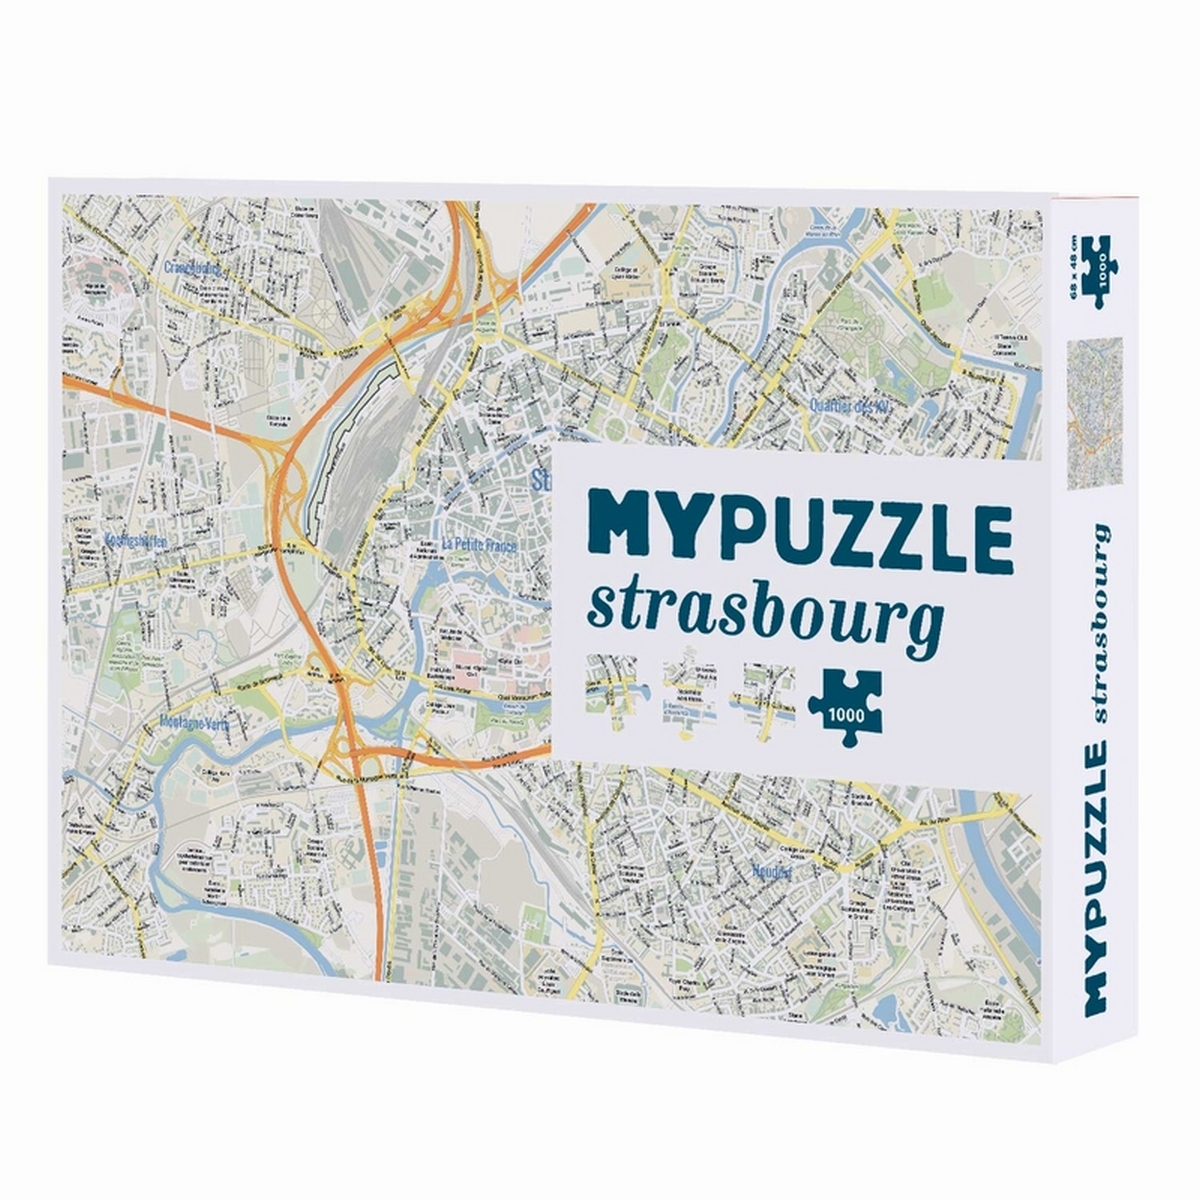 my puzzle Strasbourg helvetic une idee cadeau chez ugo et lea (1)